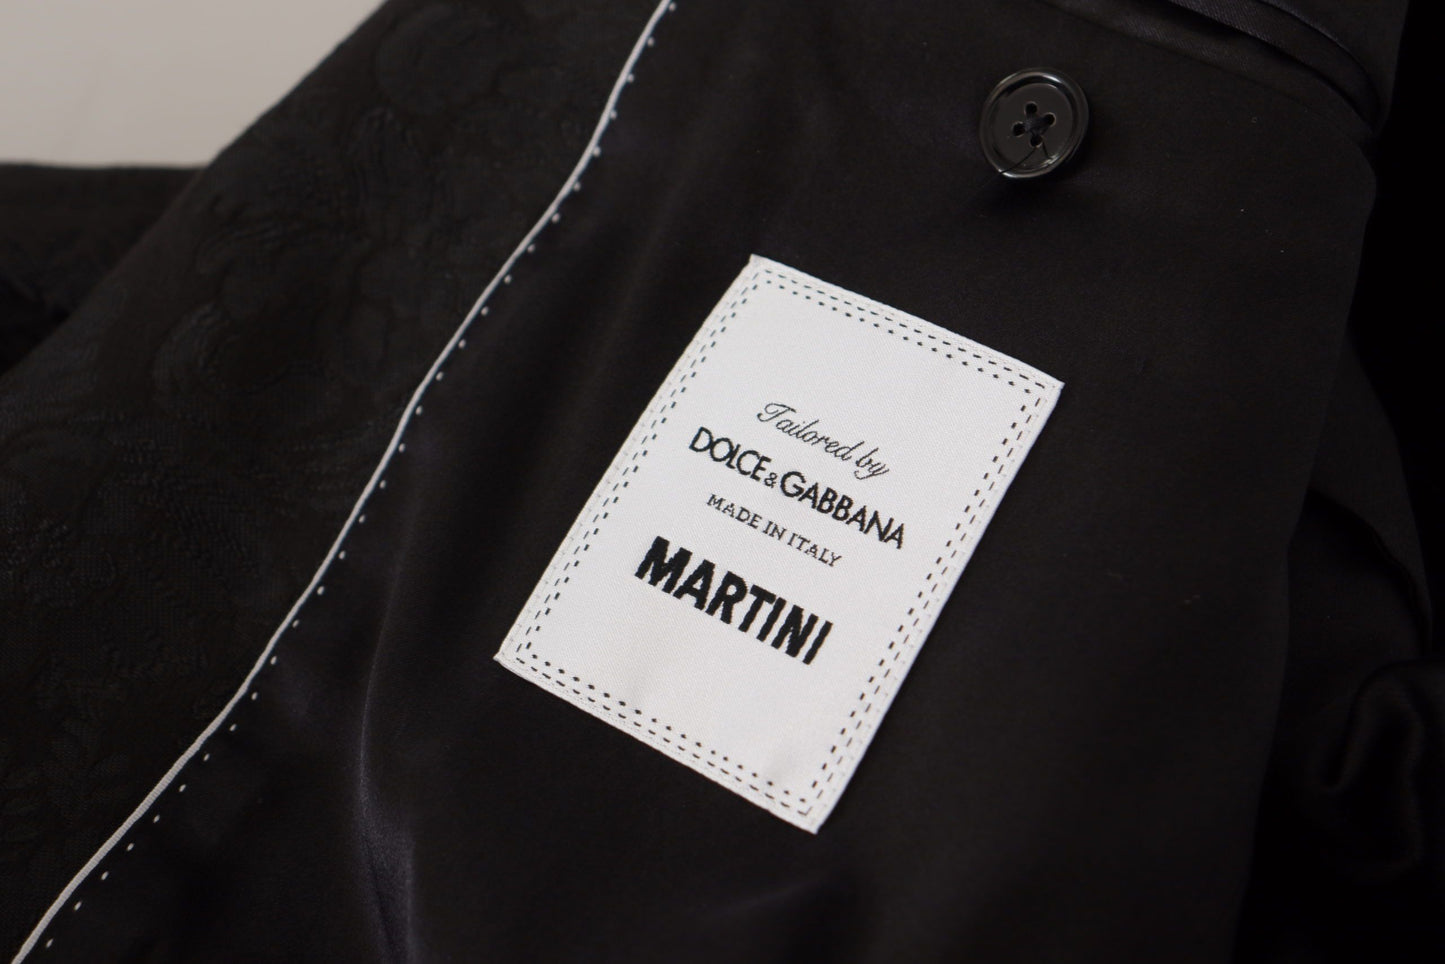 Dolce & Gabbana Black Polyester Formal 2 Piece MARTINI Suit